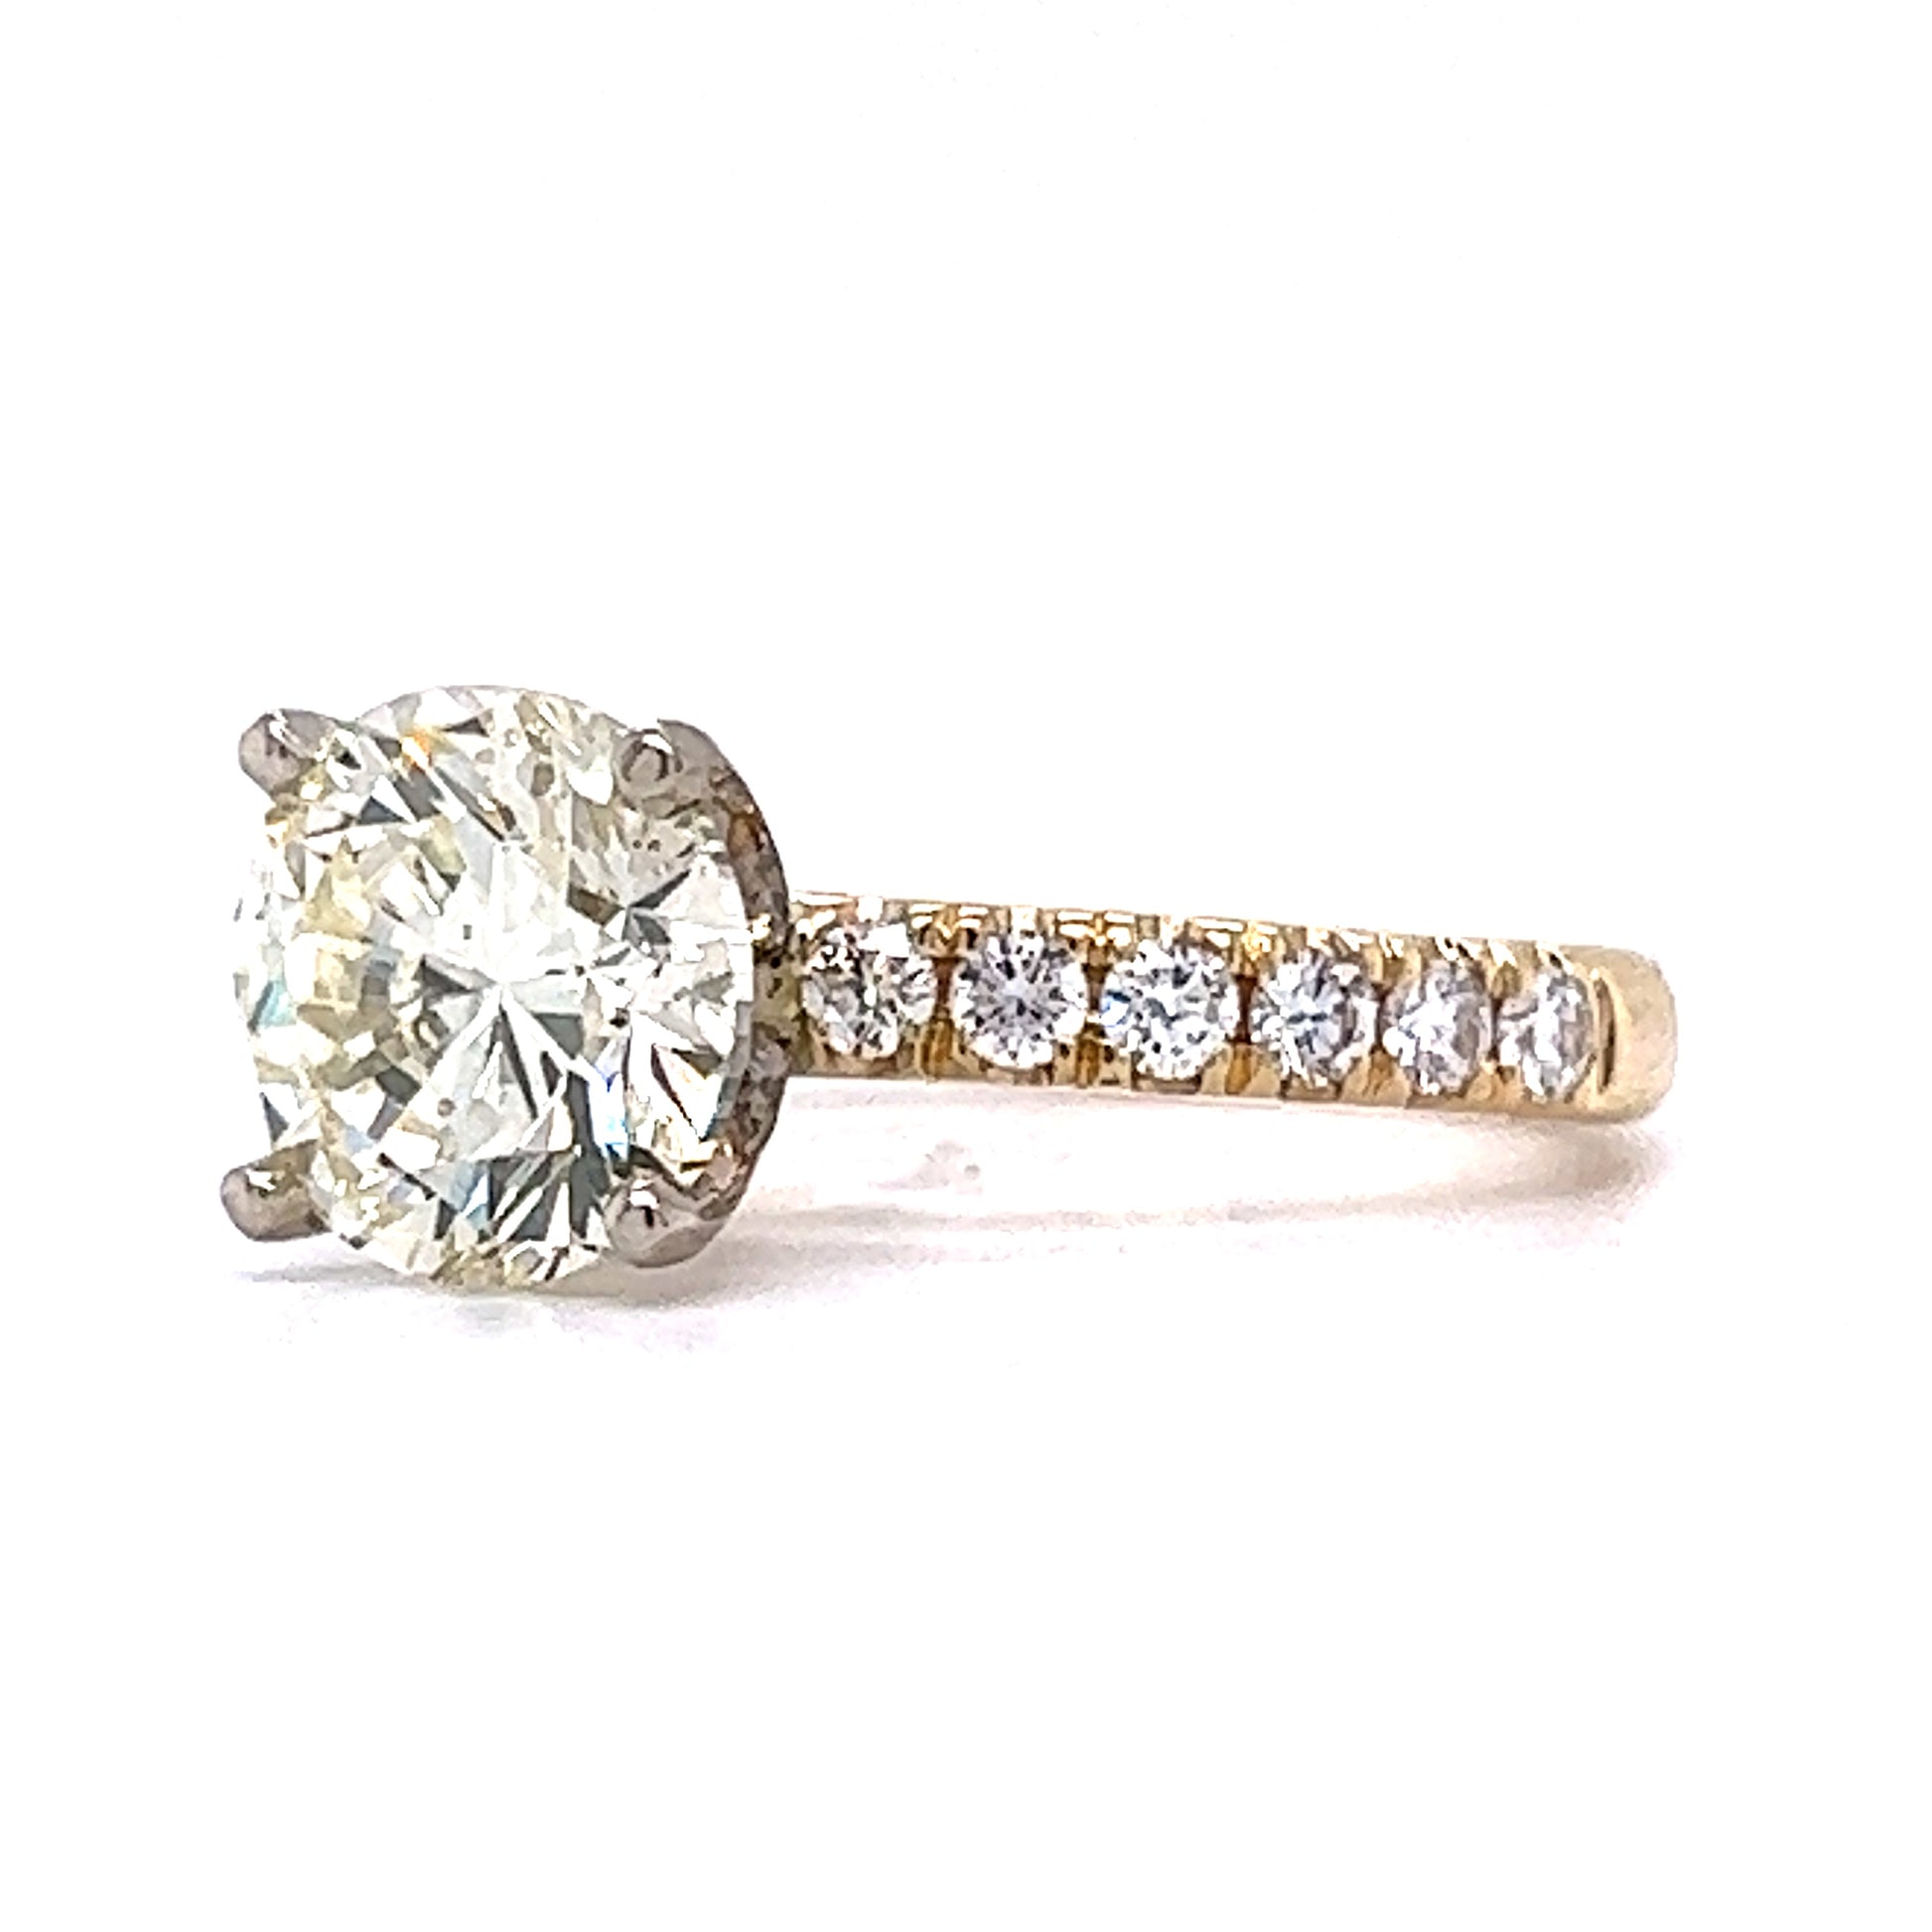 3.01 Round Brilliant Cut Diamond Engagement Ring in 14k Gold